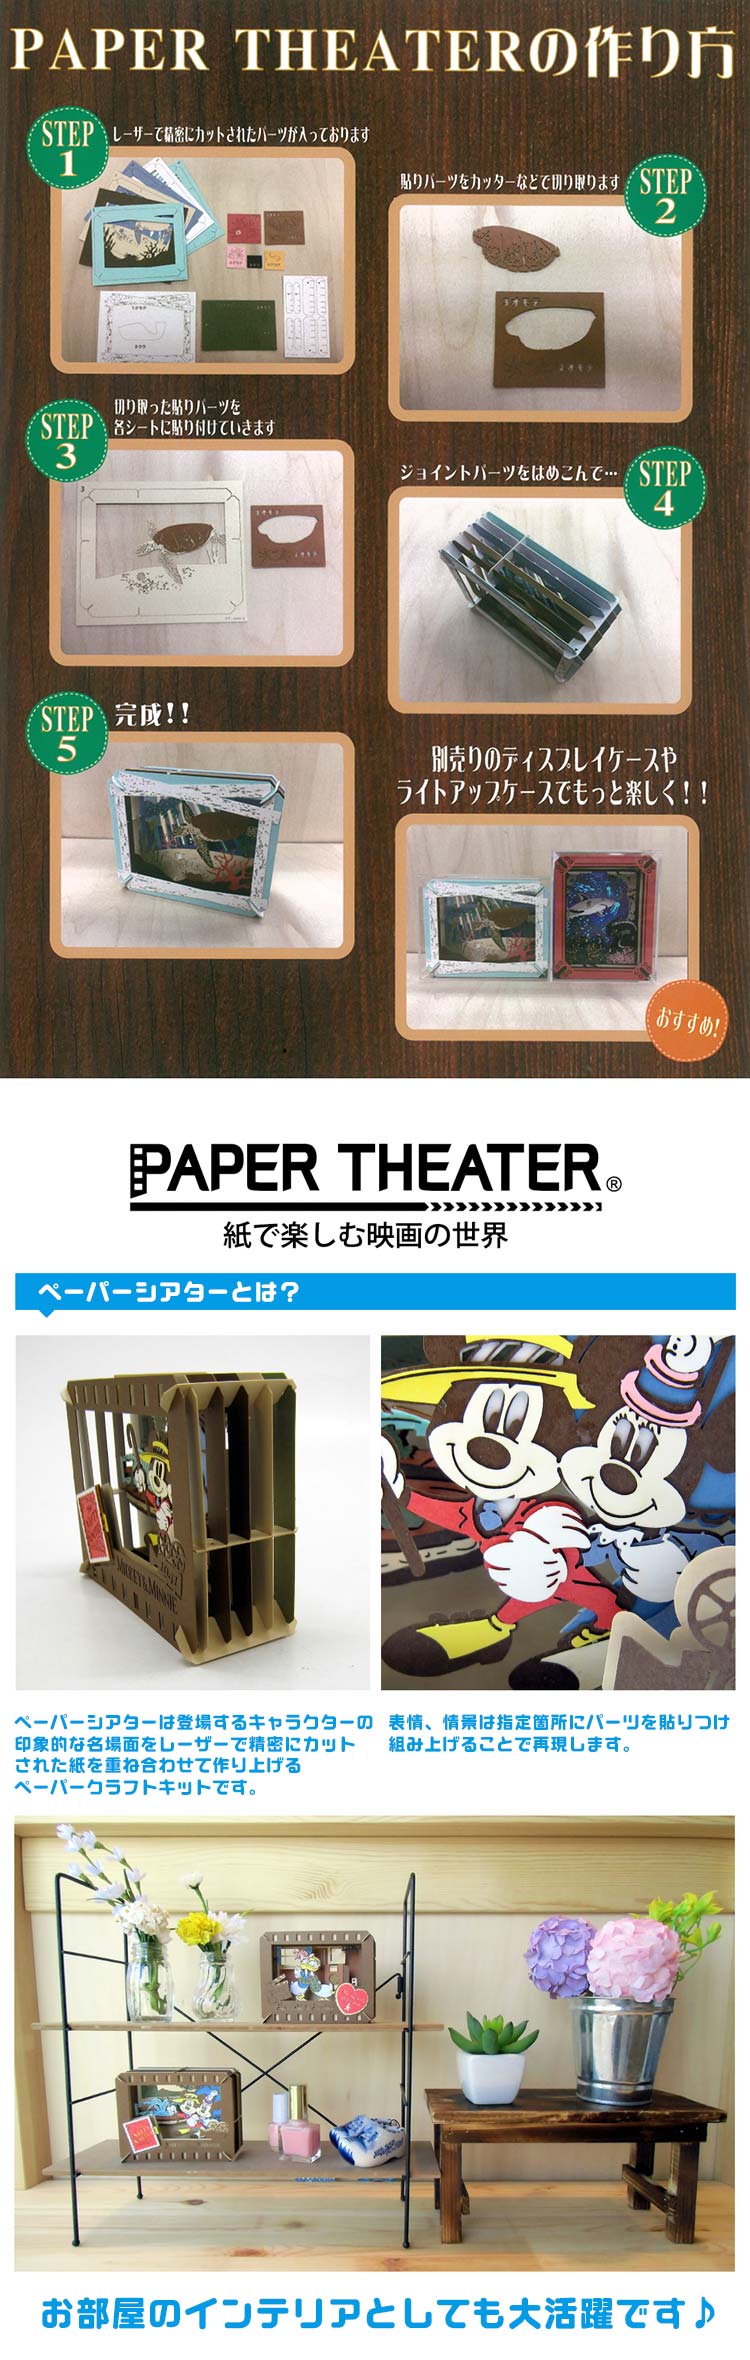 Paper Theater - 閃光聖誕樹